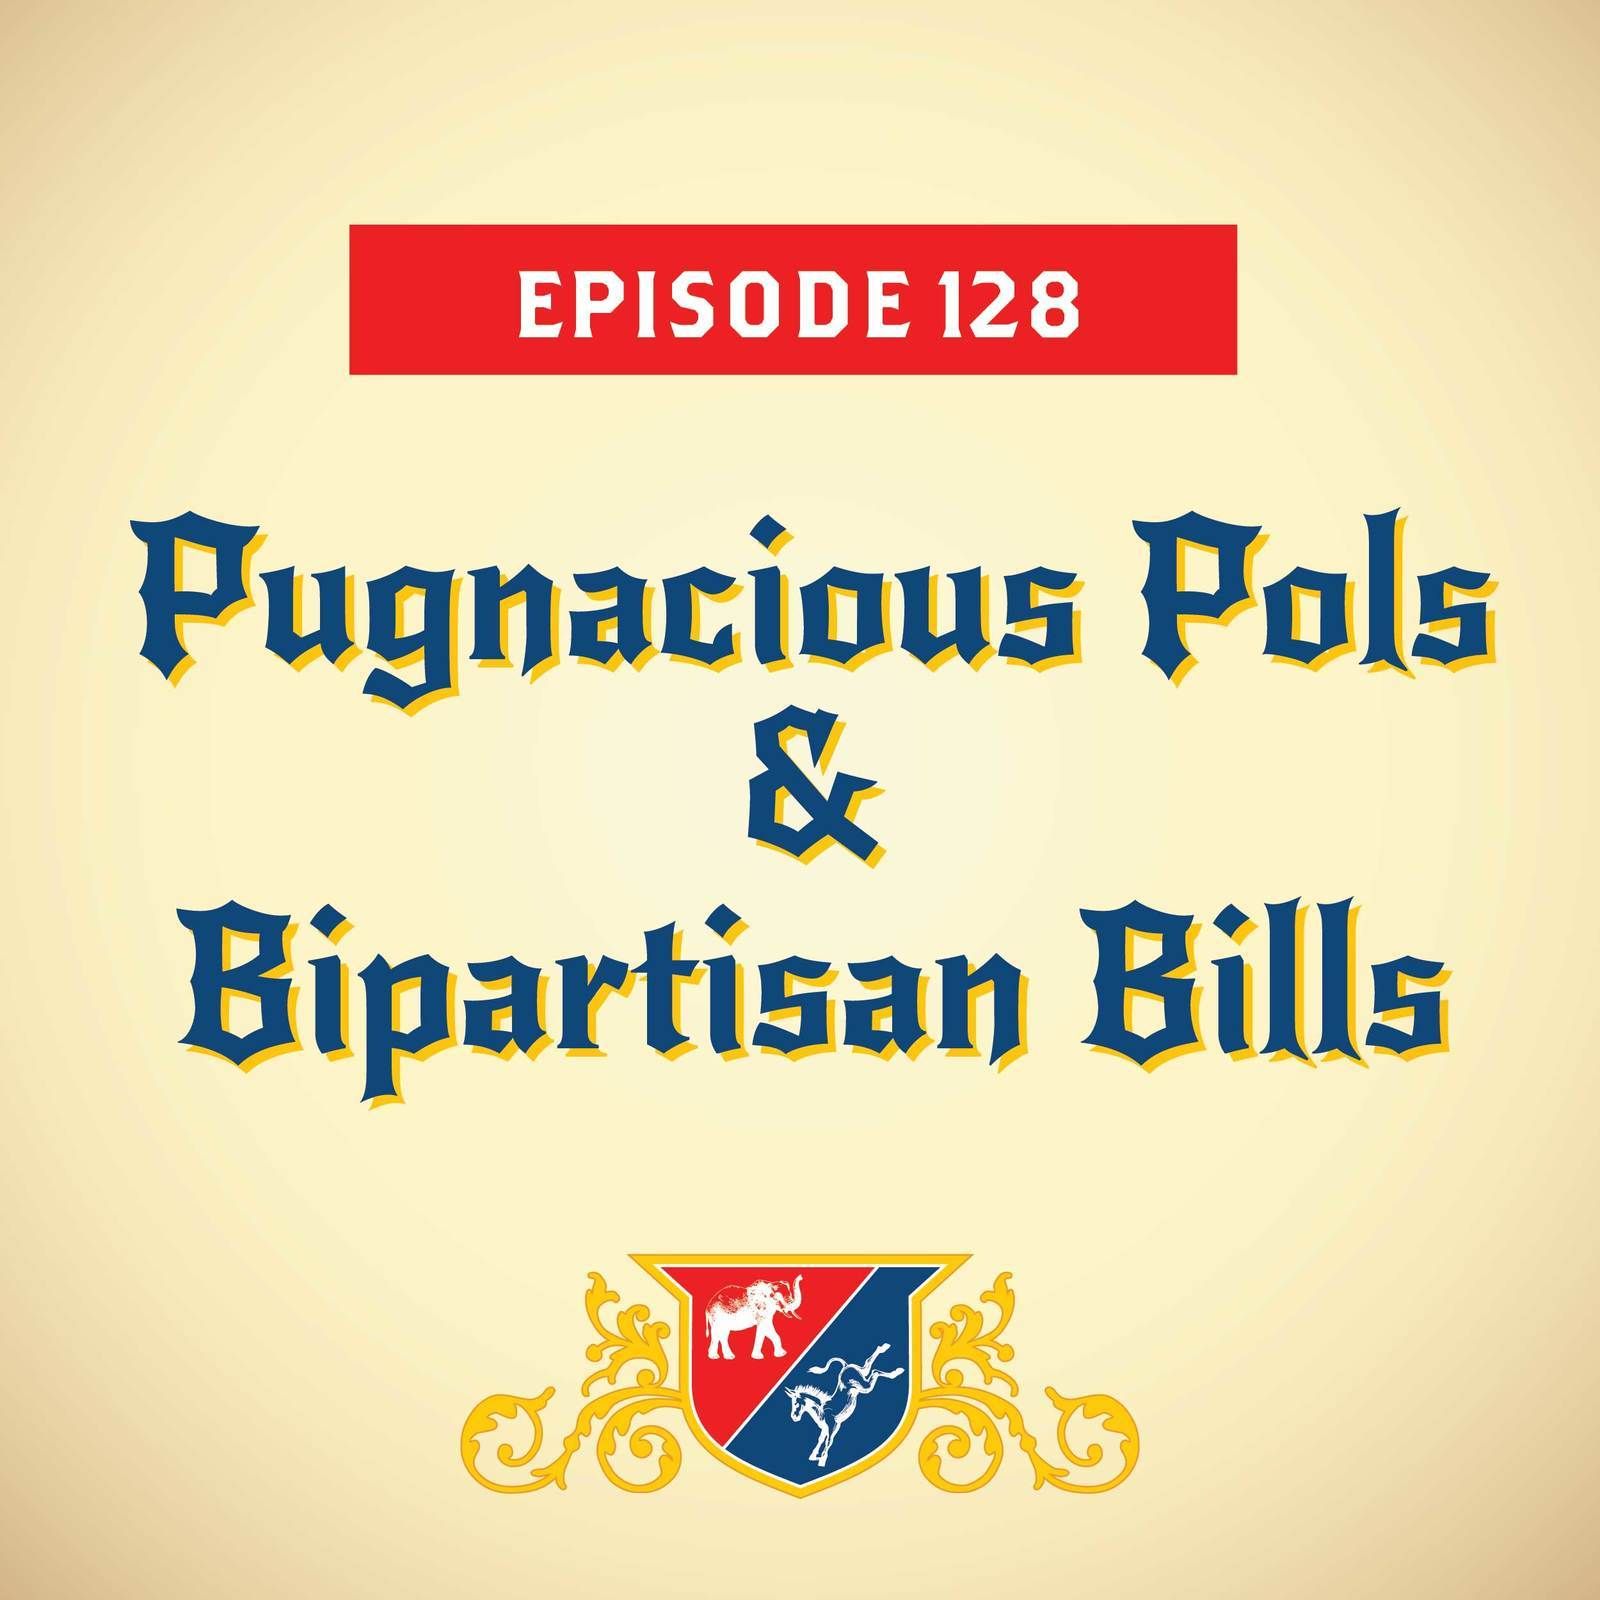 Pugnacious Pols & Bipartisan Bills (with Paul Begala)